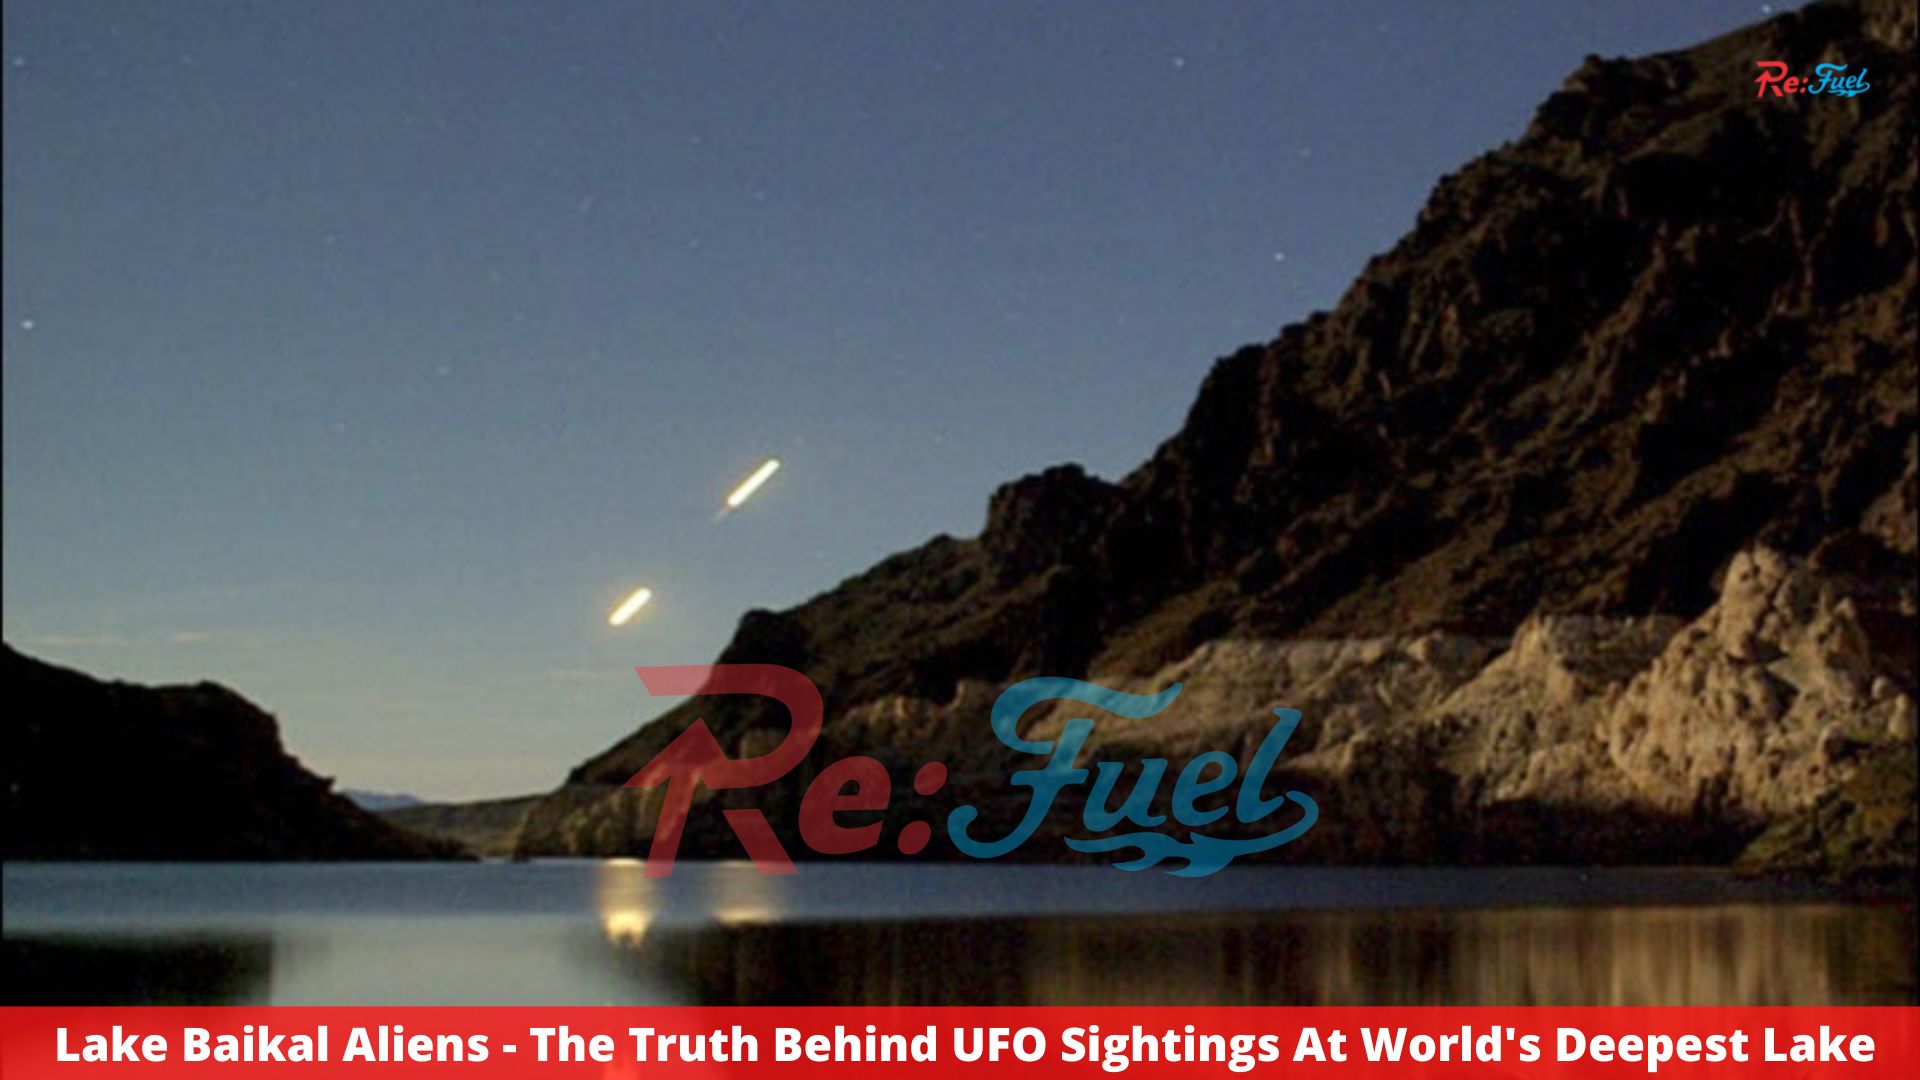 Lake Baikal Aliens - The Truth Behind UFO Sightings At World's Deepest Lake